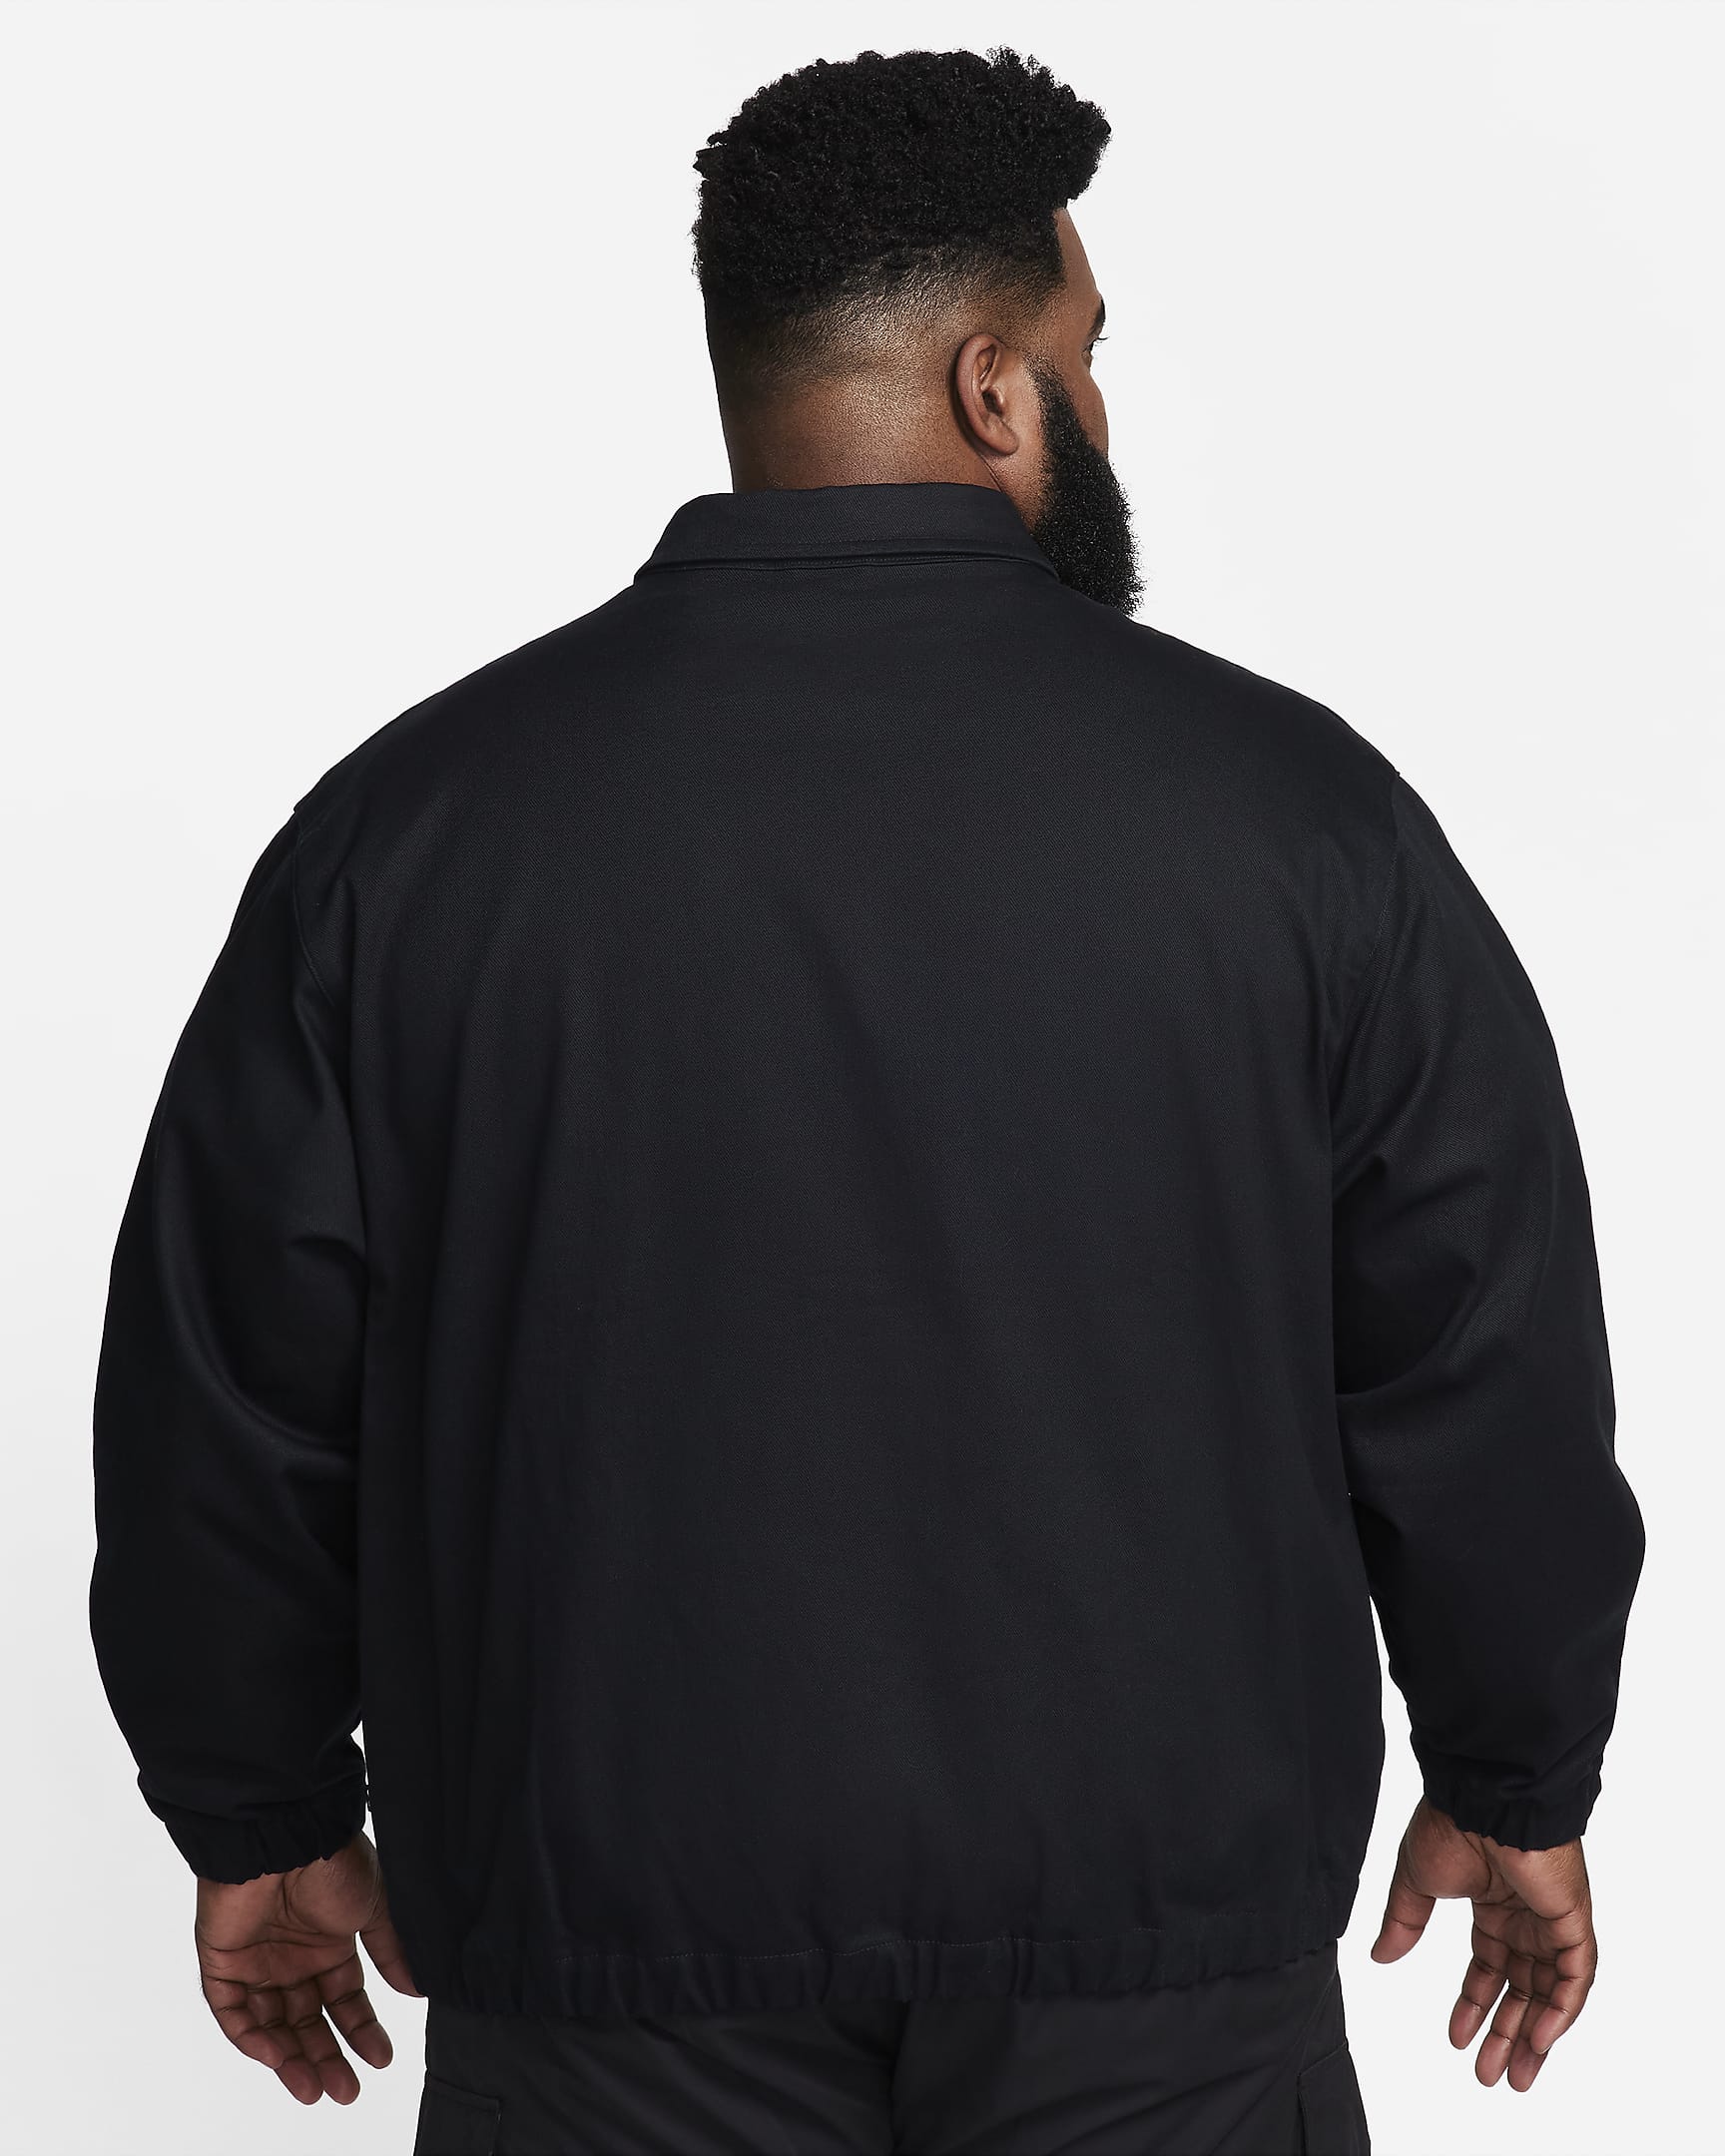 Nike SB Woven Twill Premium Skate Jacket - Black